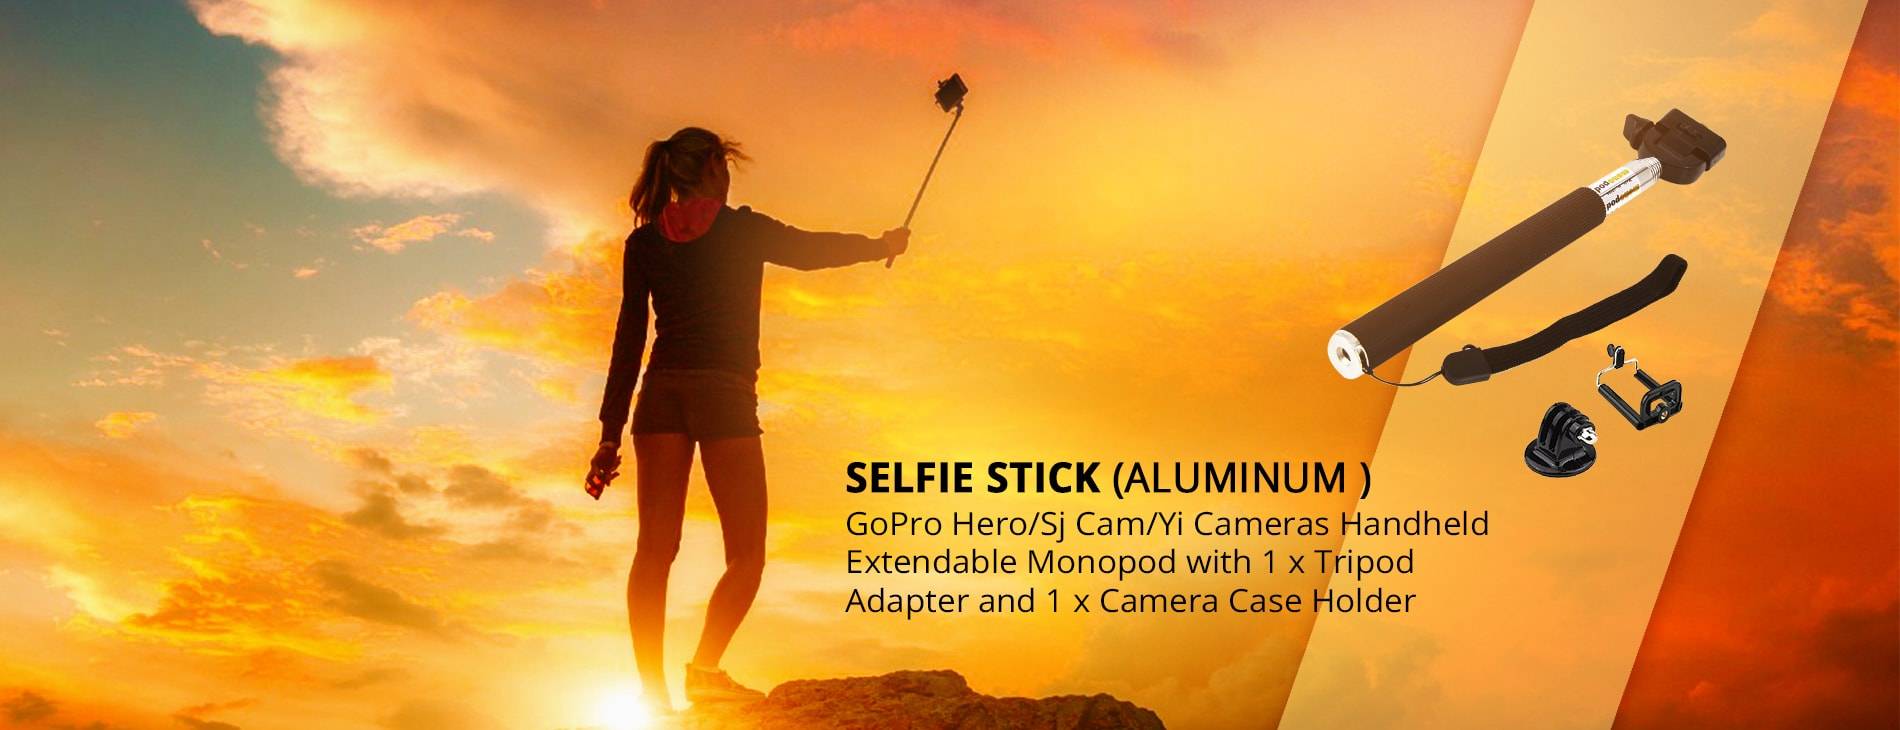 Selfie Stick (GoPro Hero/SJ Cam/Yi Cameras)